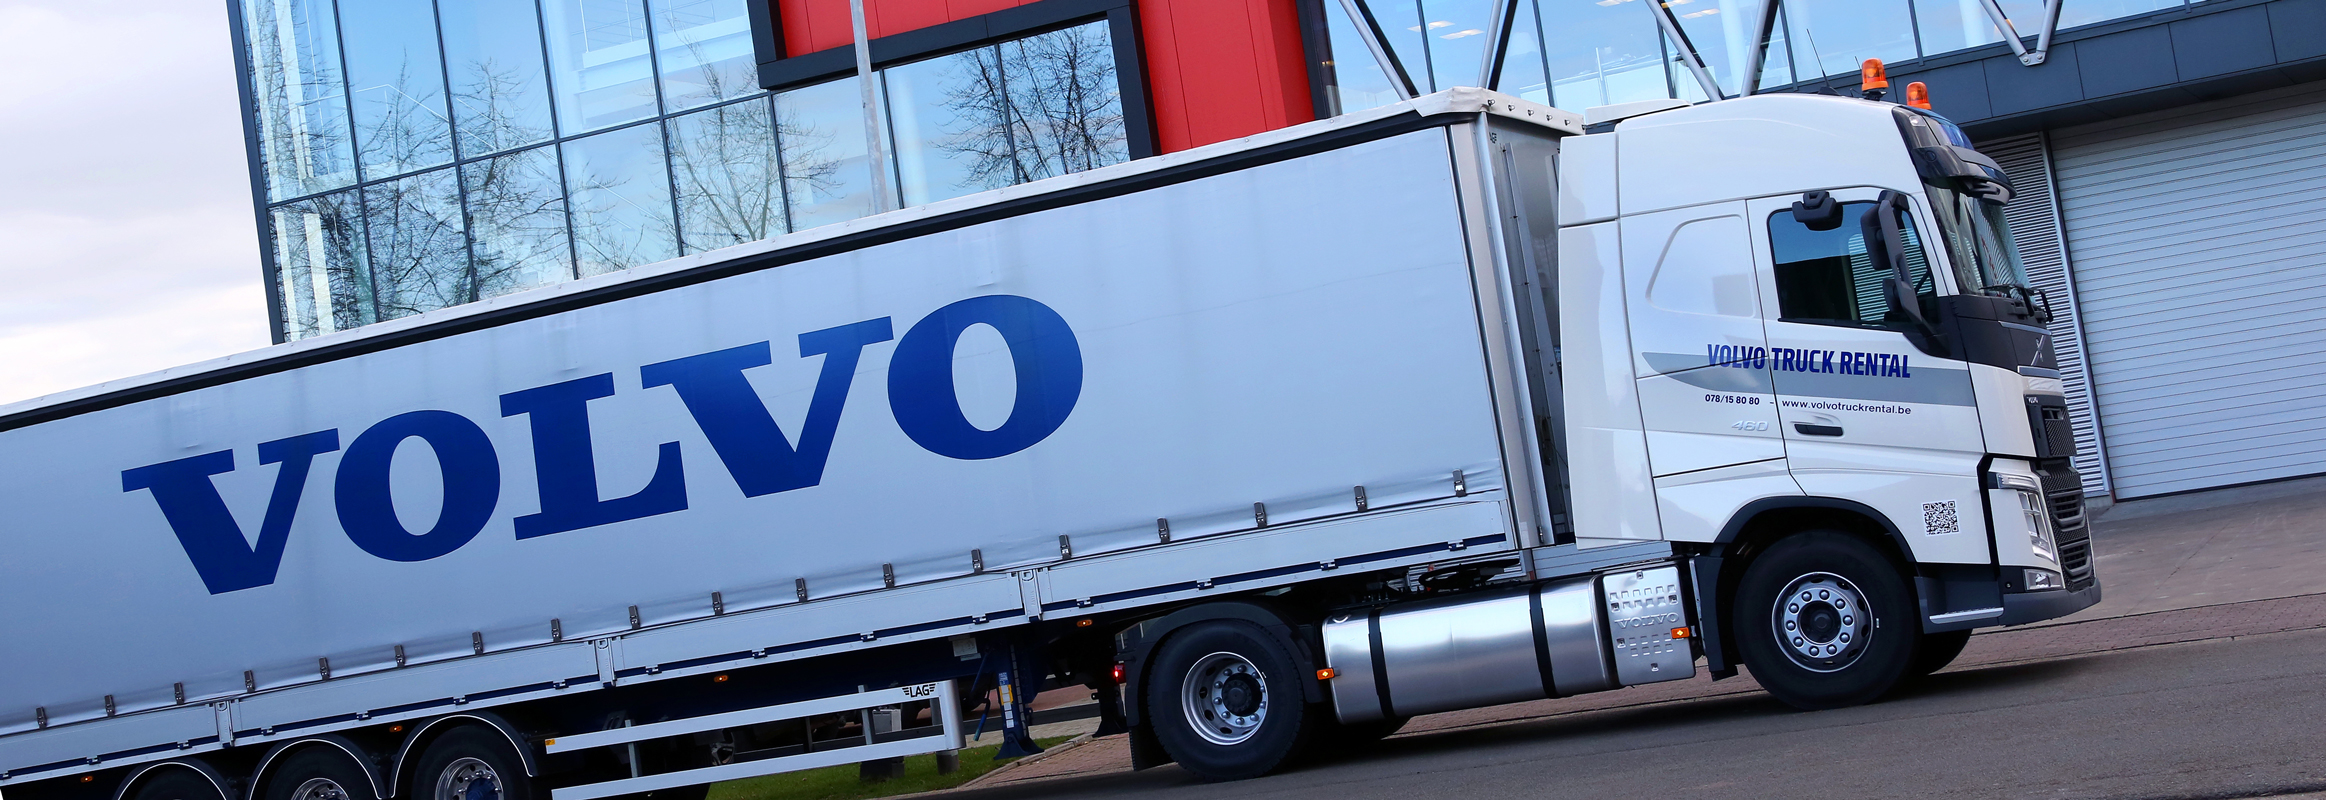 Volvo Truck Rental est un partenaire flexible